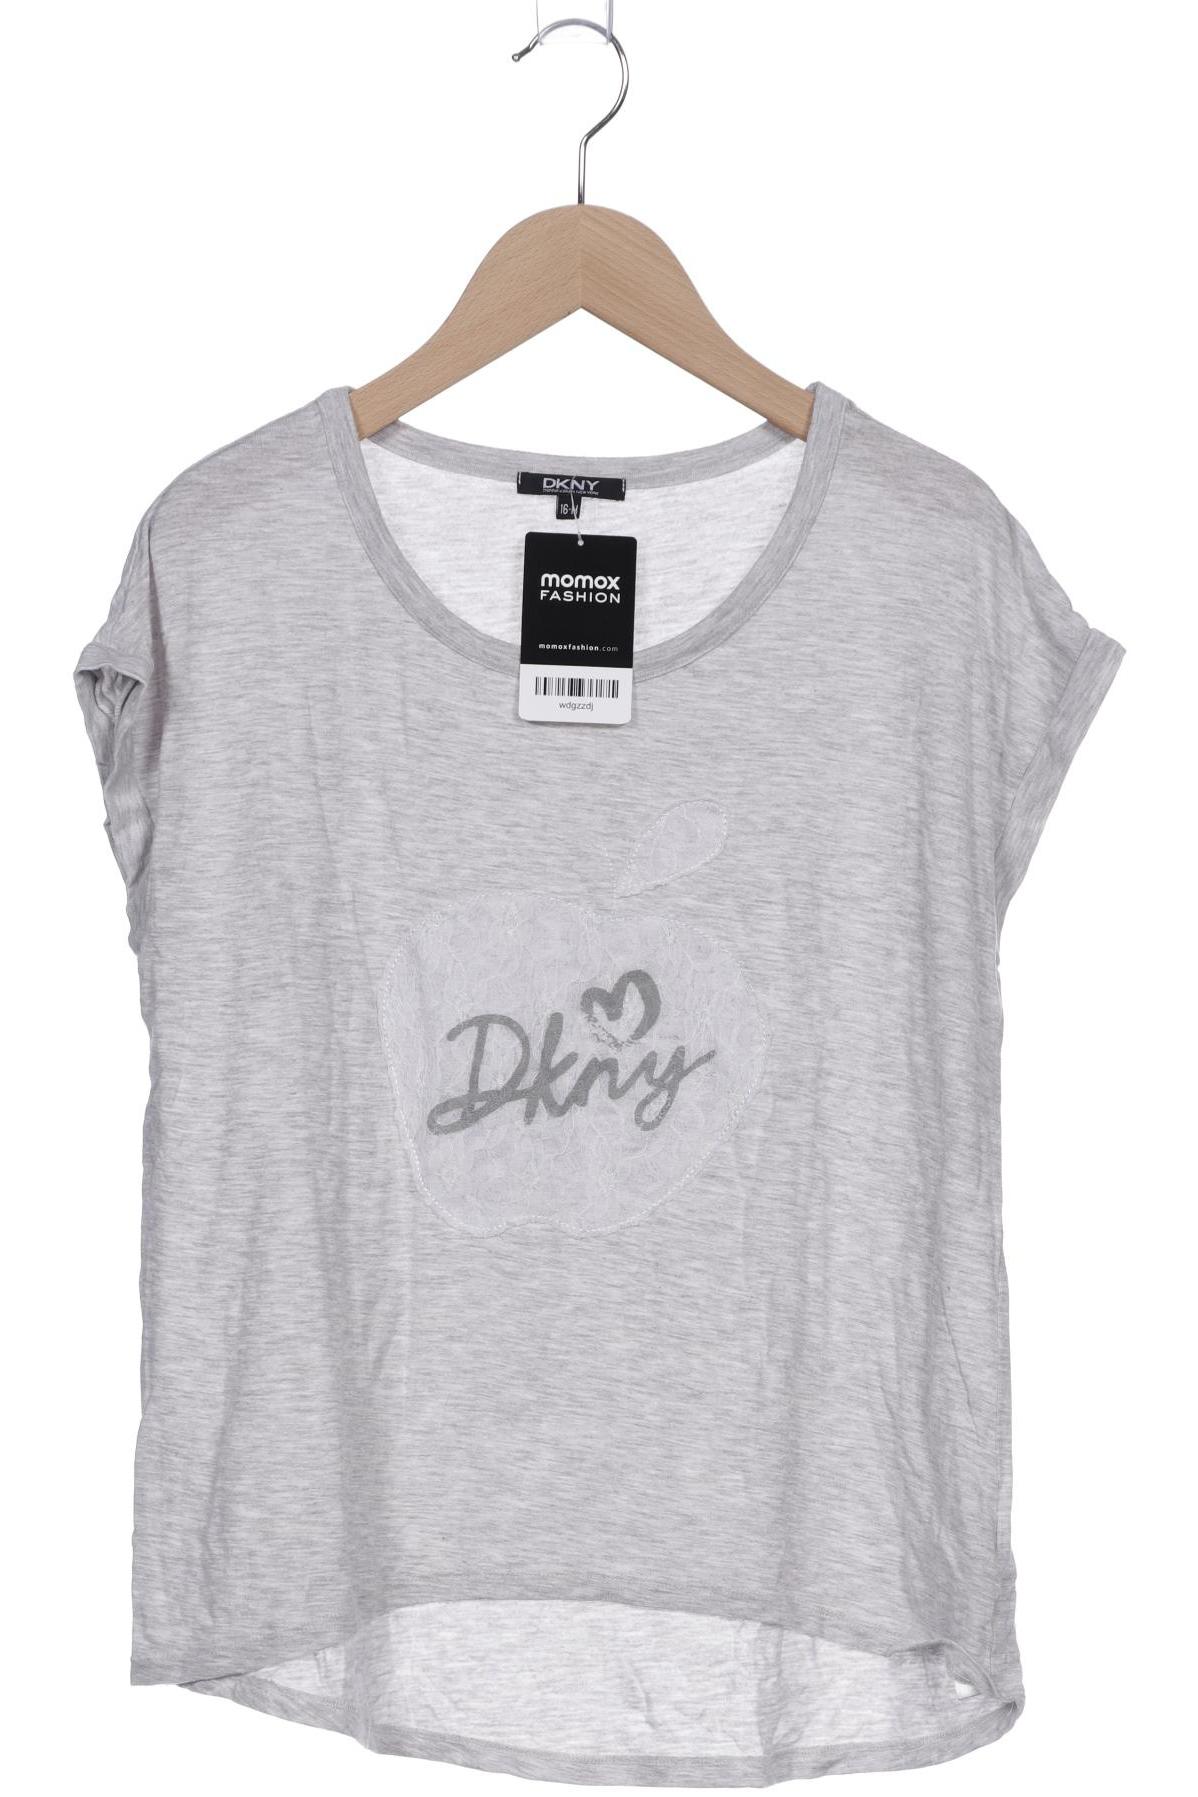 Dkny by Donna Karan New York Damen T-Shirt, grau, Gr. 176 von DKNY by Donna Karan New York